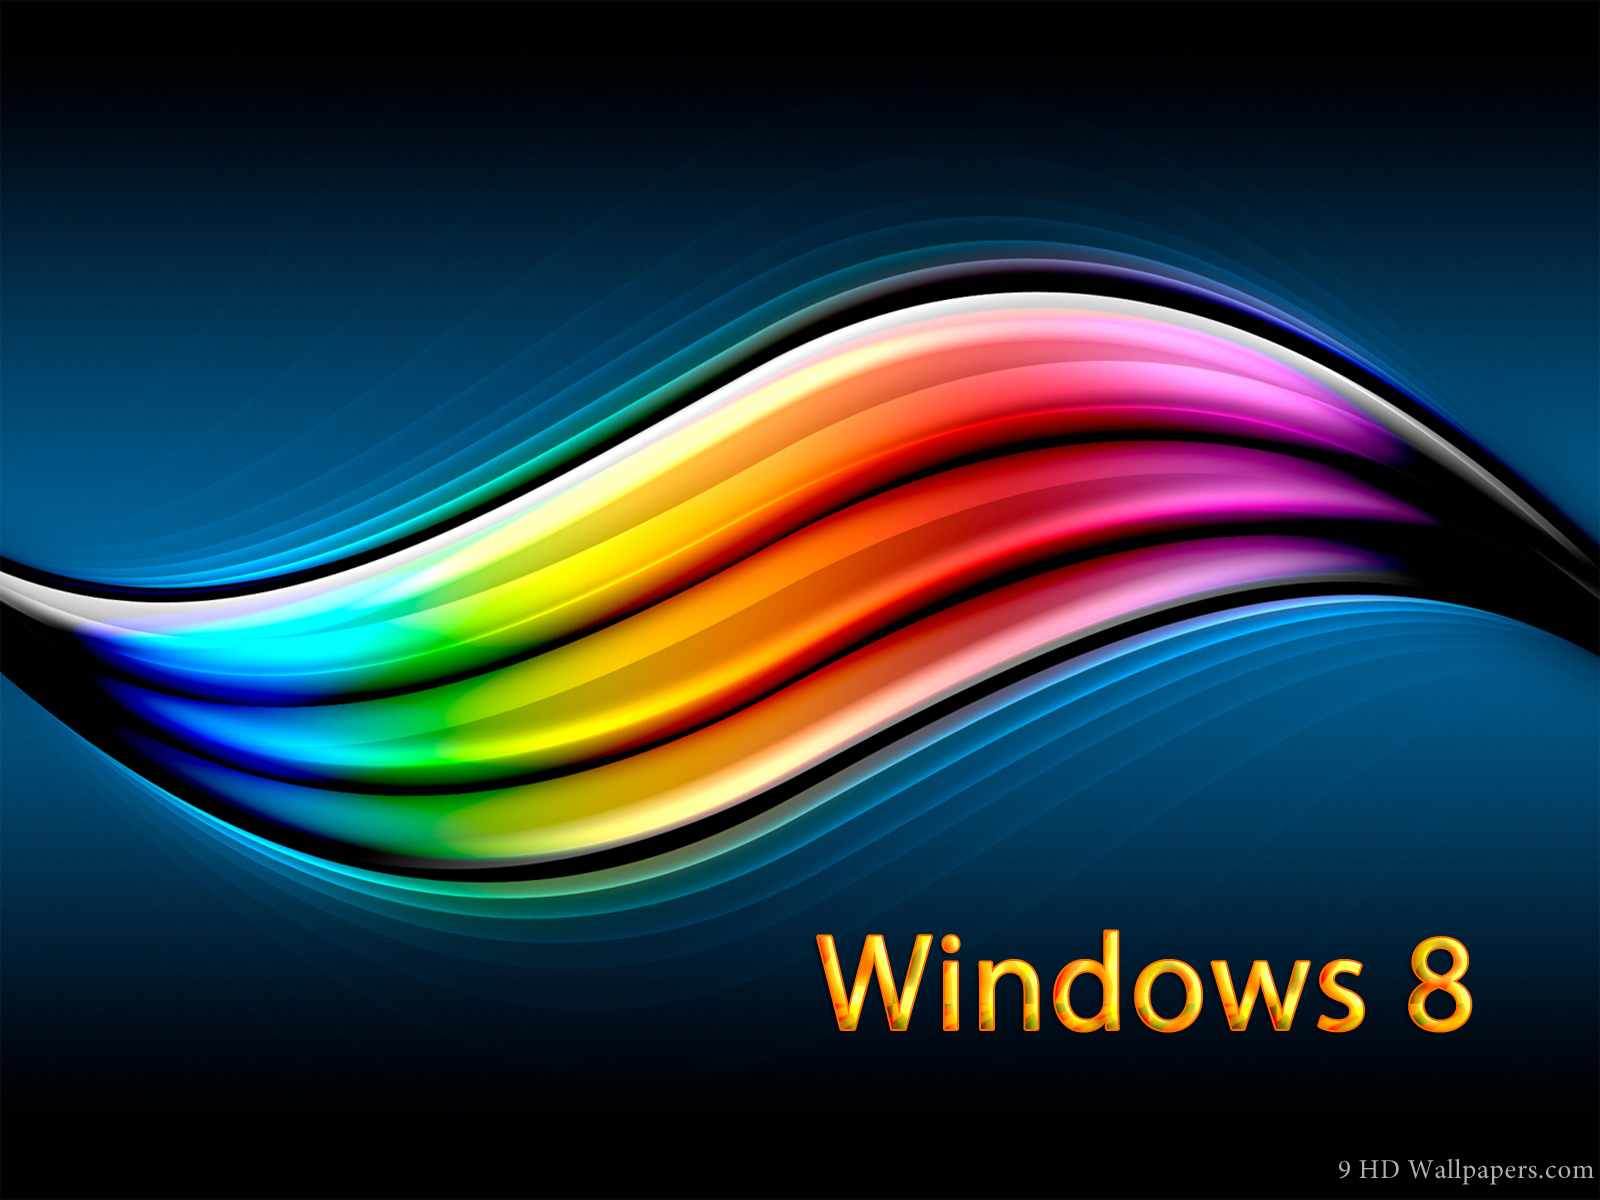 Windows 8 Hd Wallpapers Free Download Wallpaper - 762915